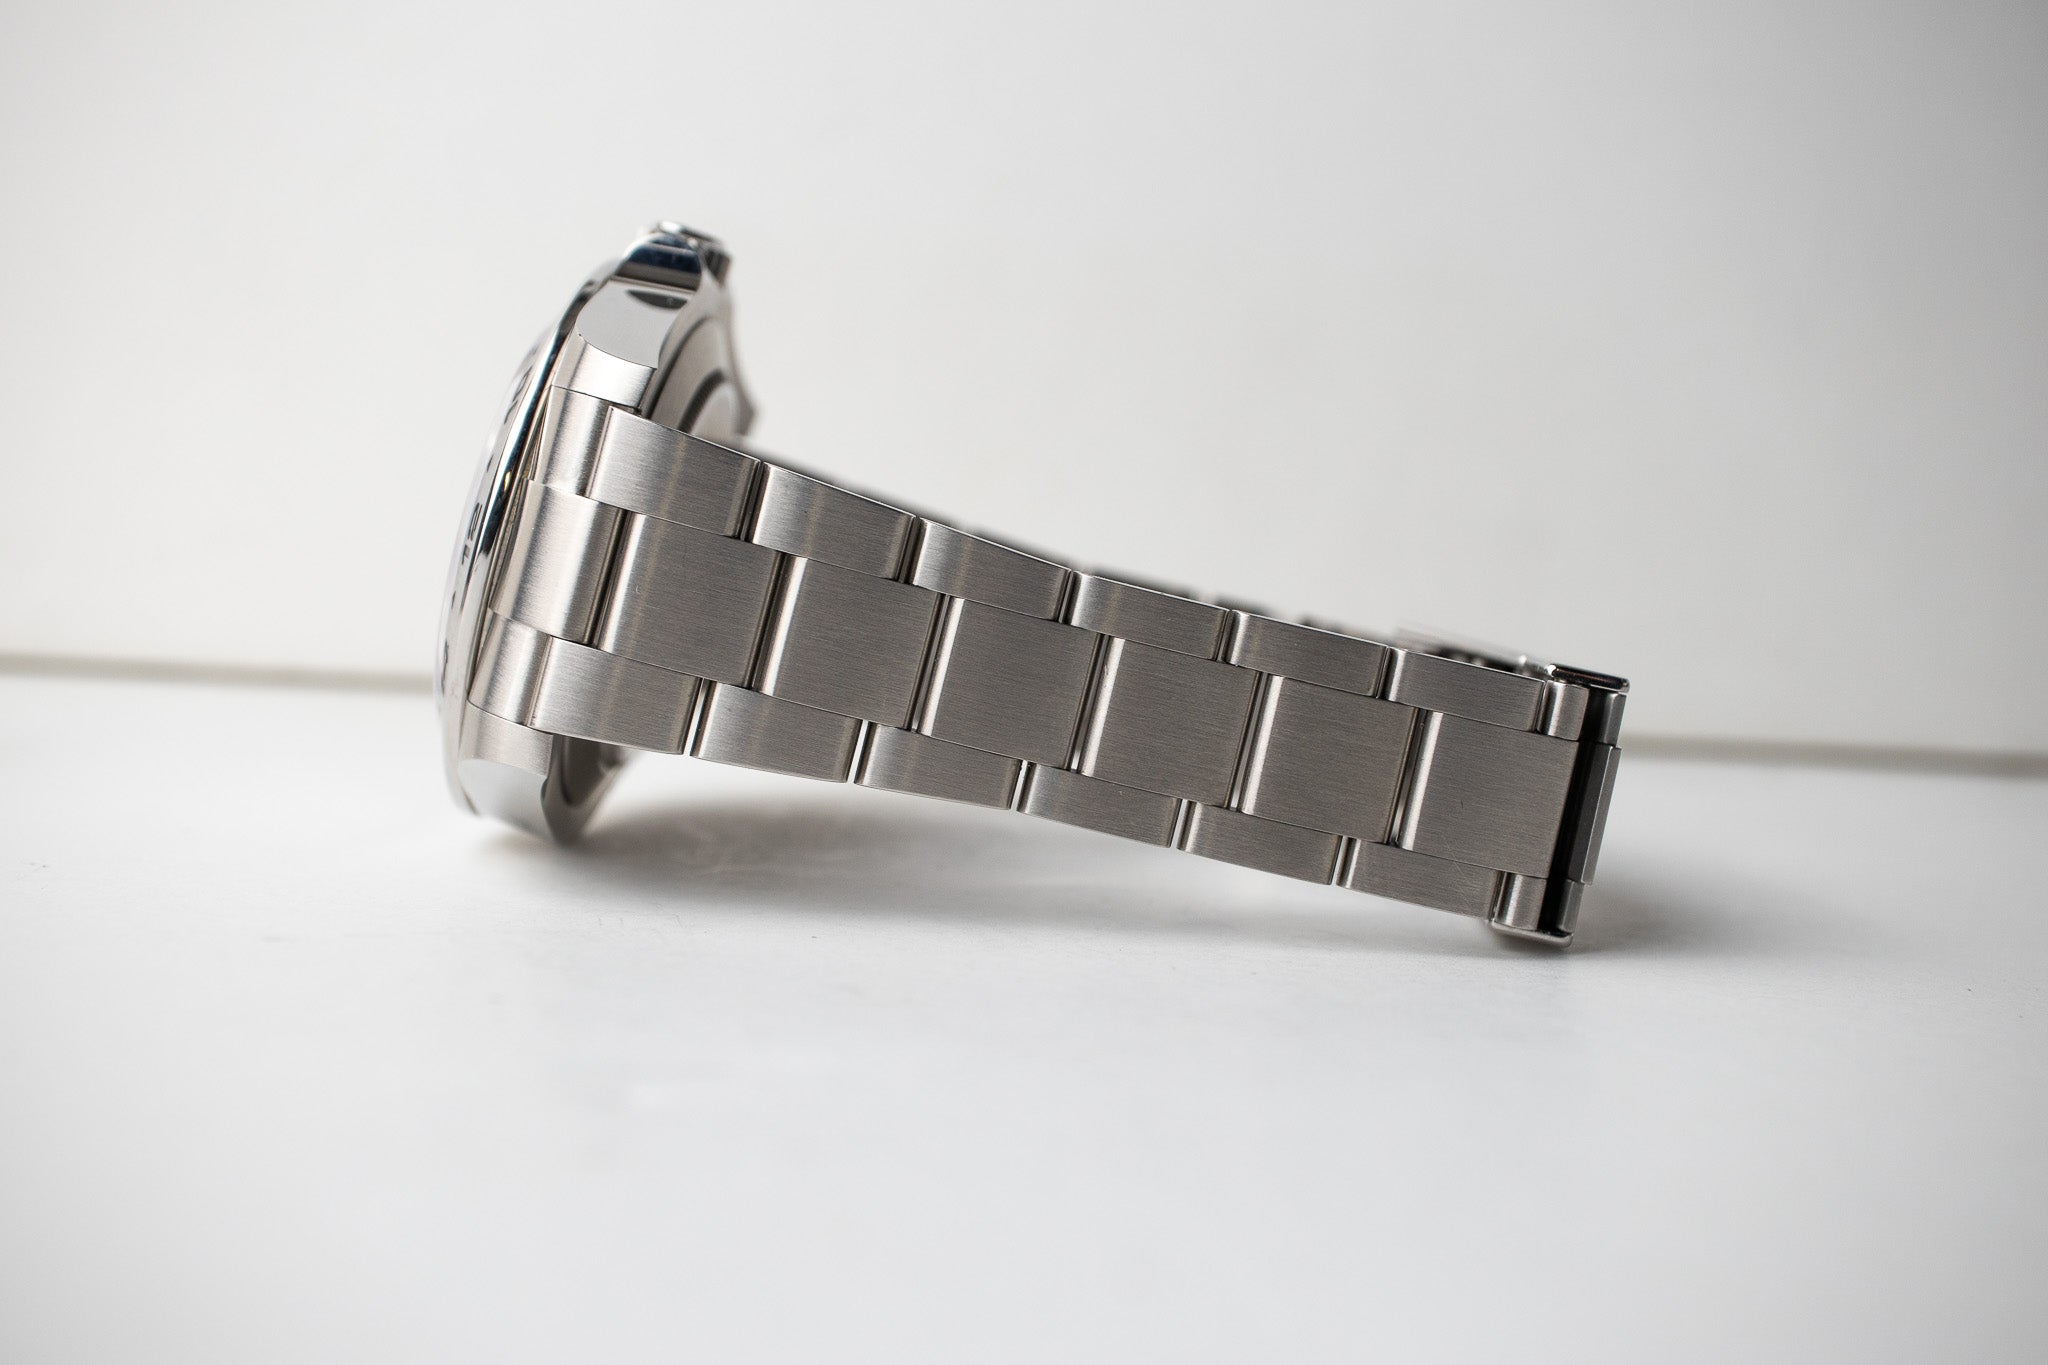 Rolex Explorer II reference 16570 stainless steel bracelet